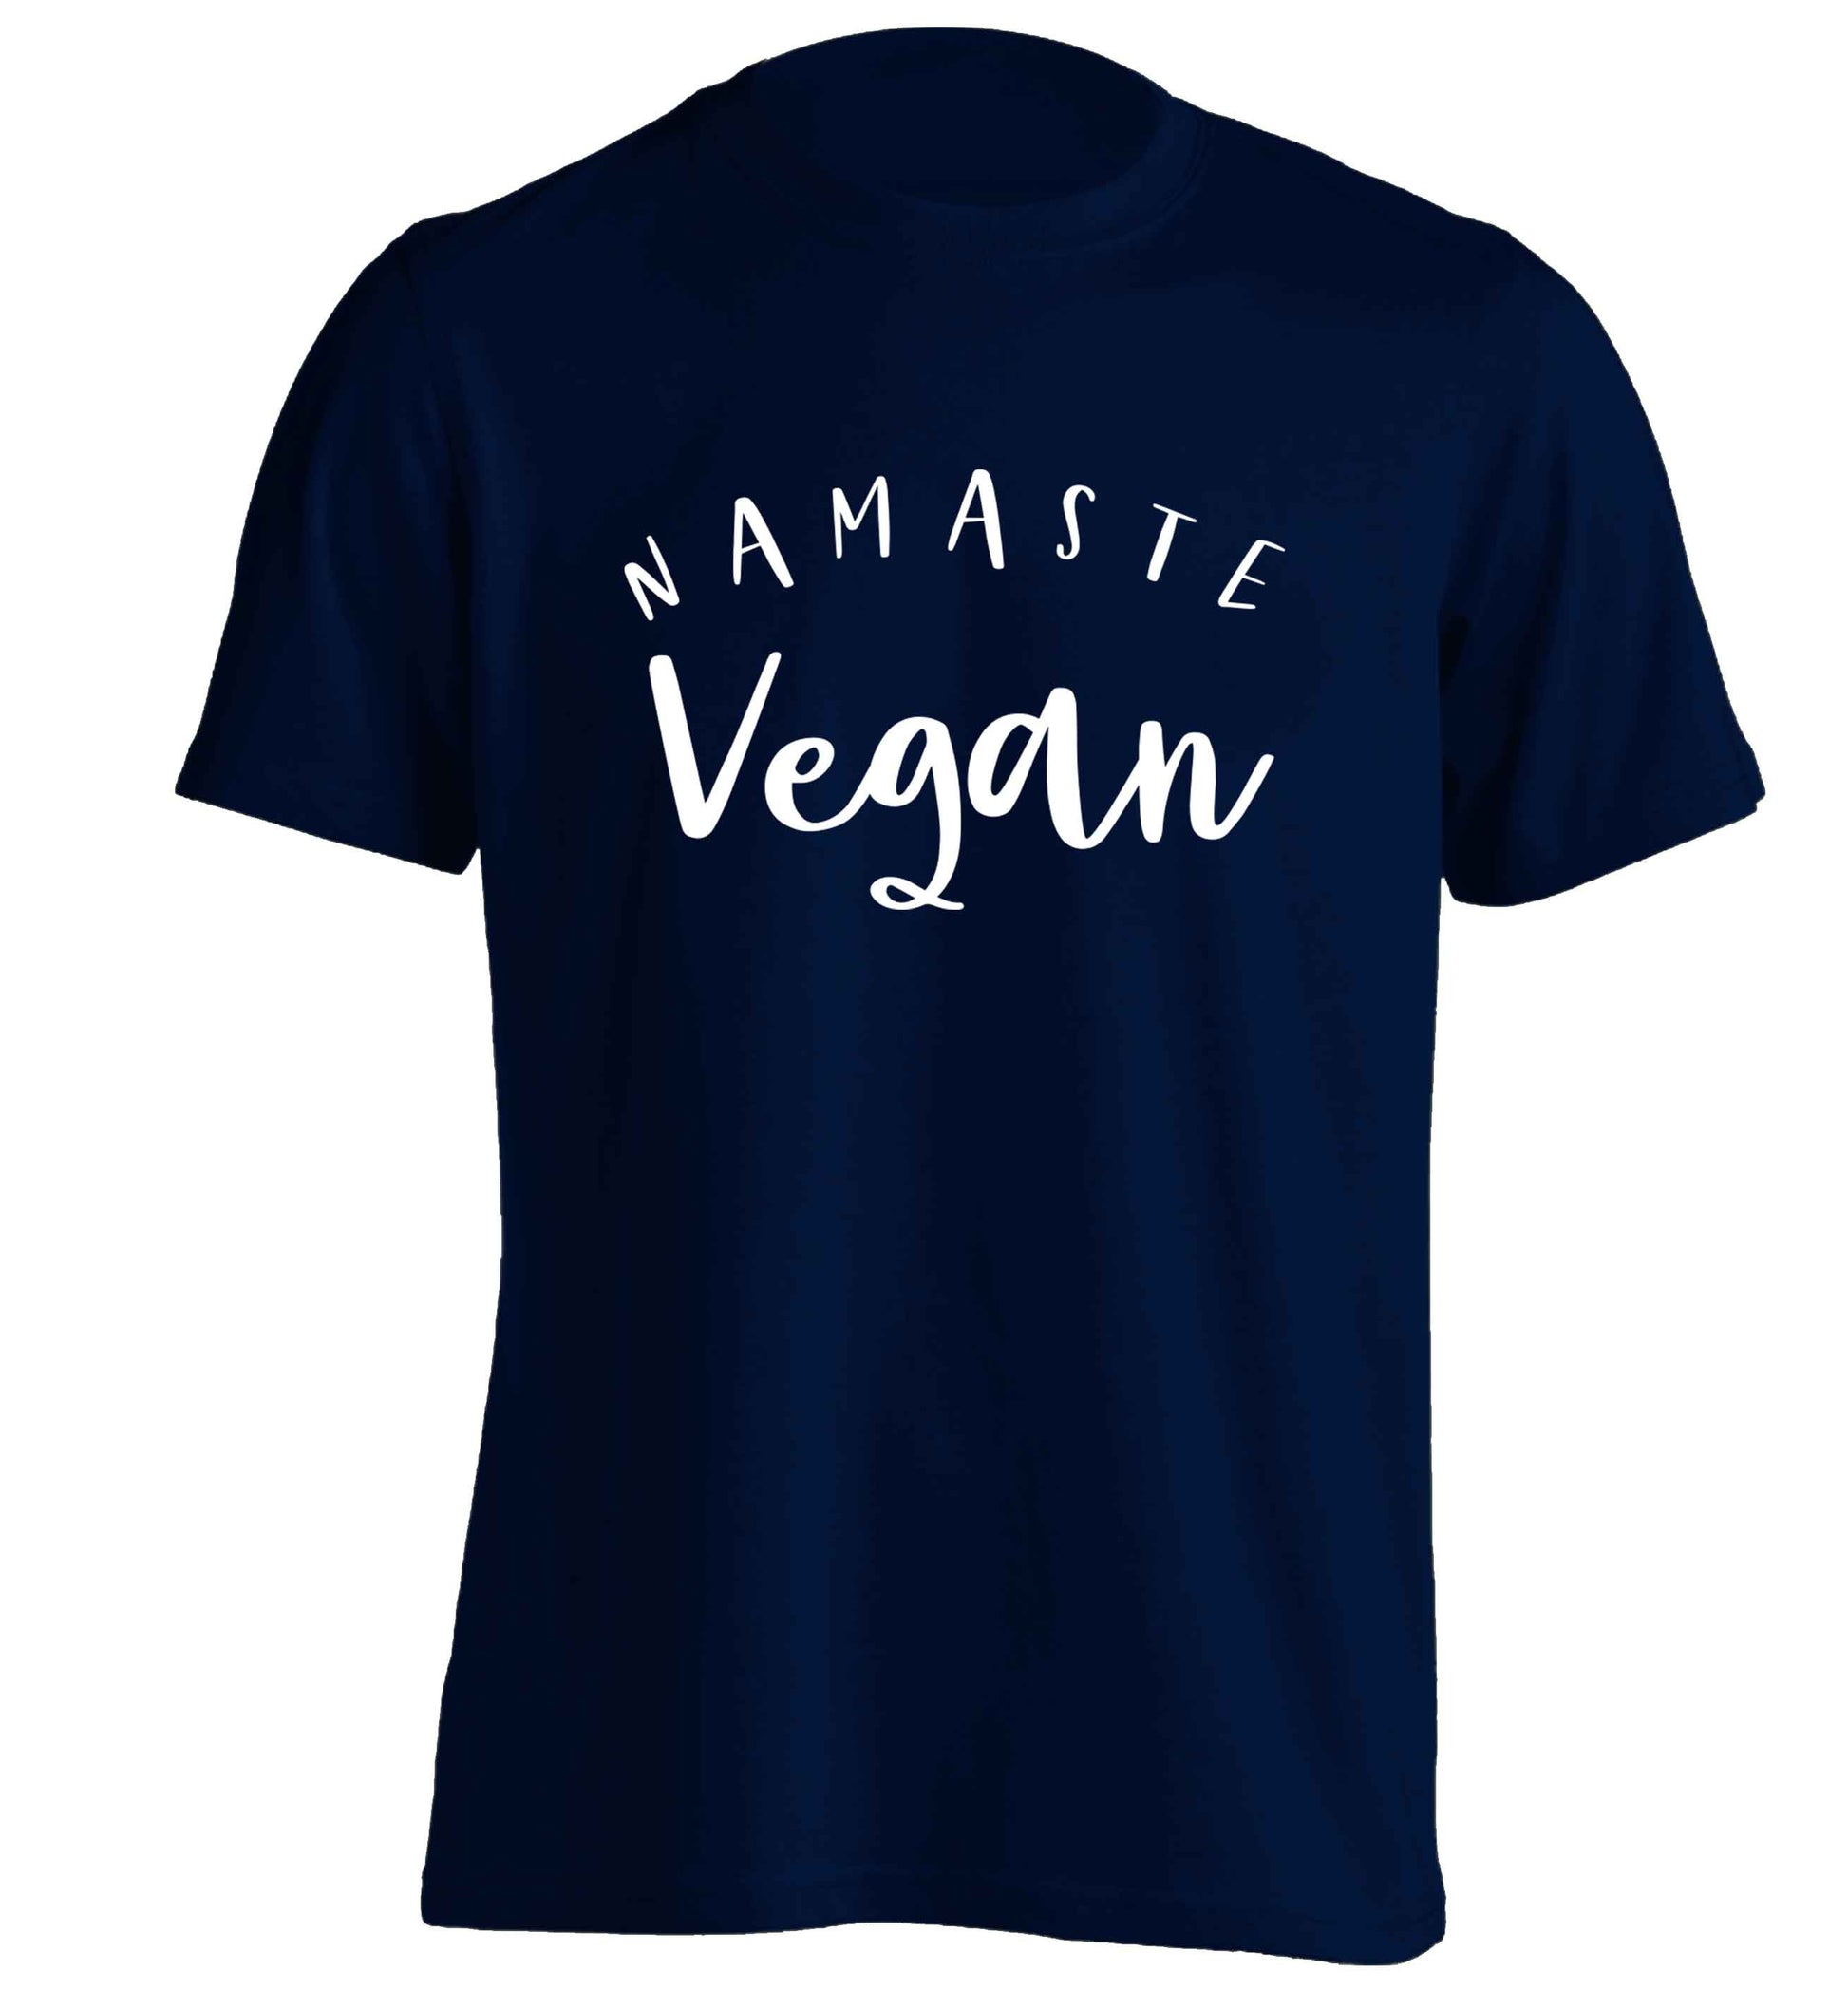 Namaste vegan adults unisex navy Tshirt 2XL